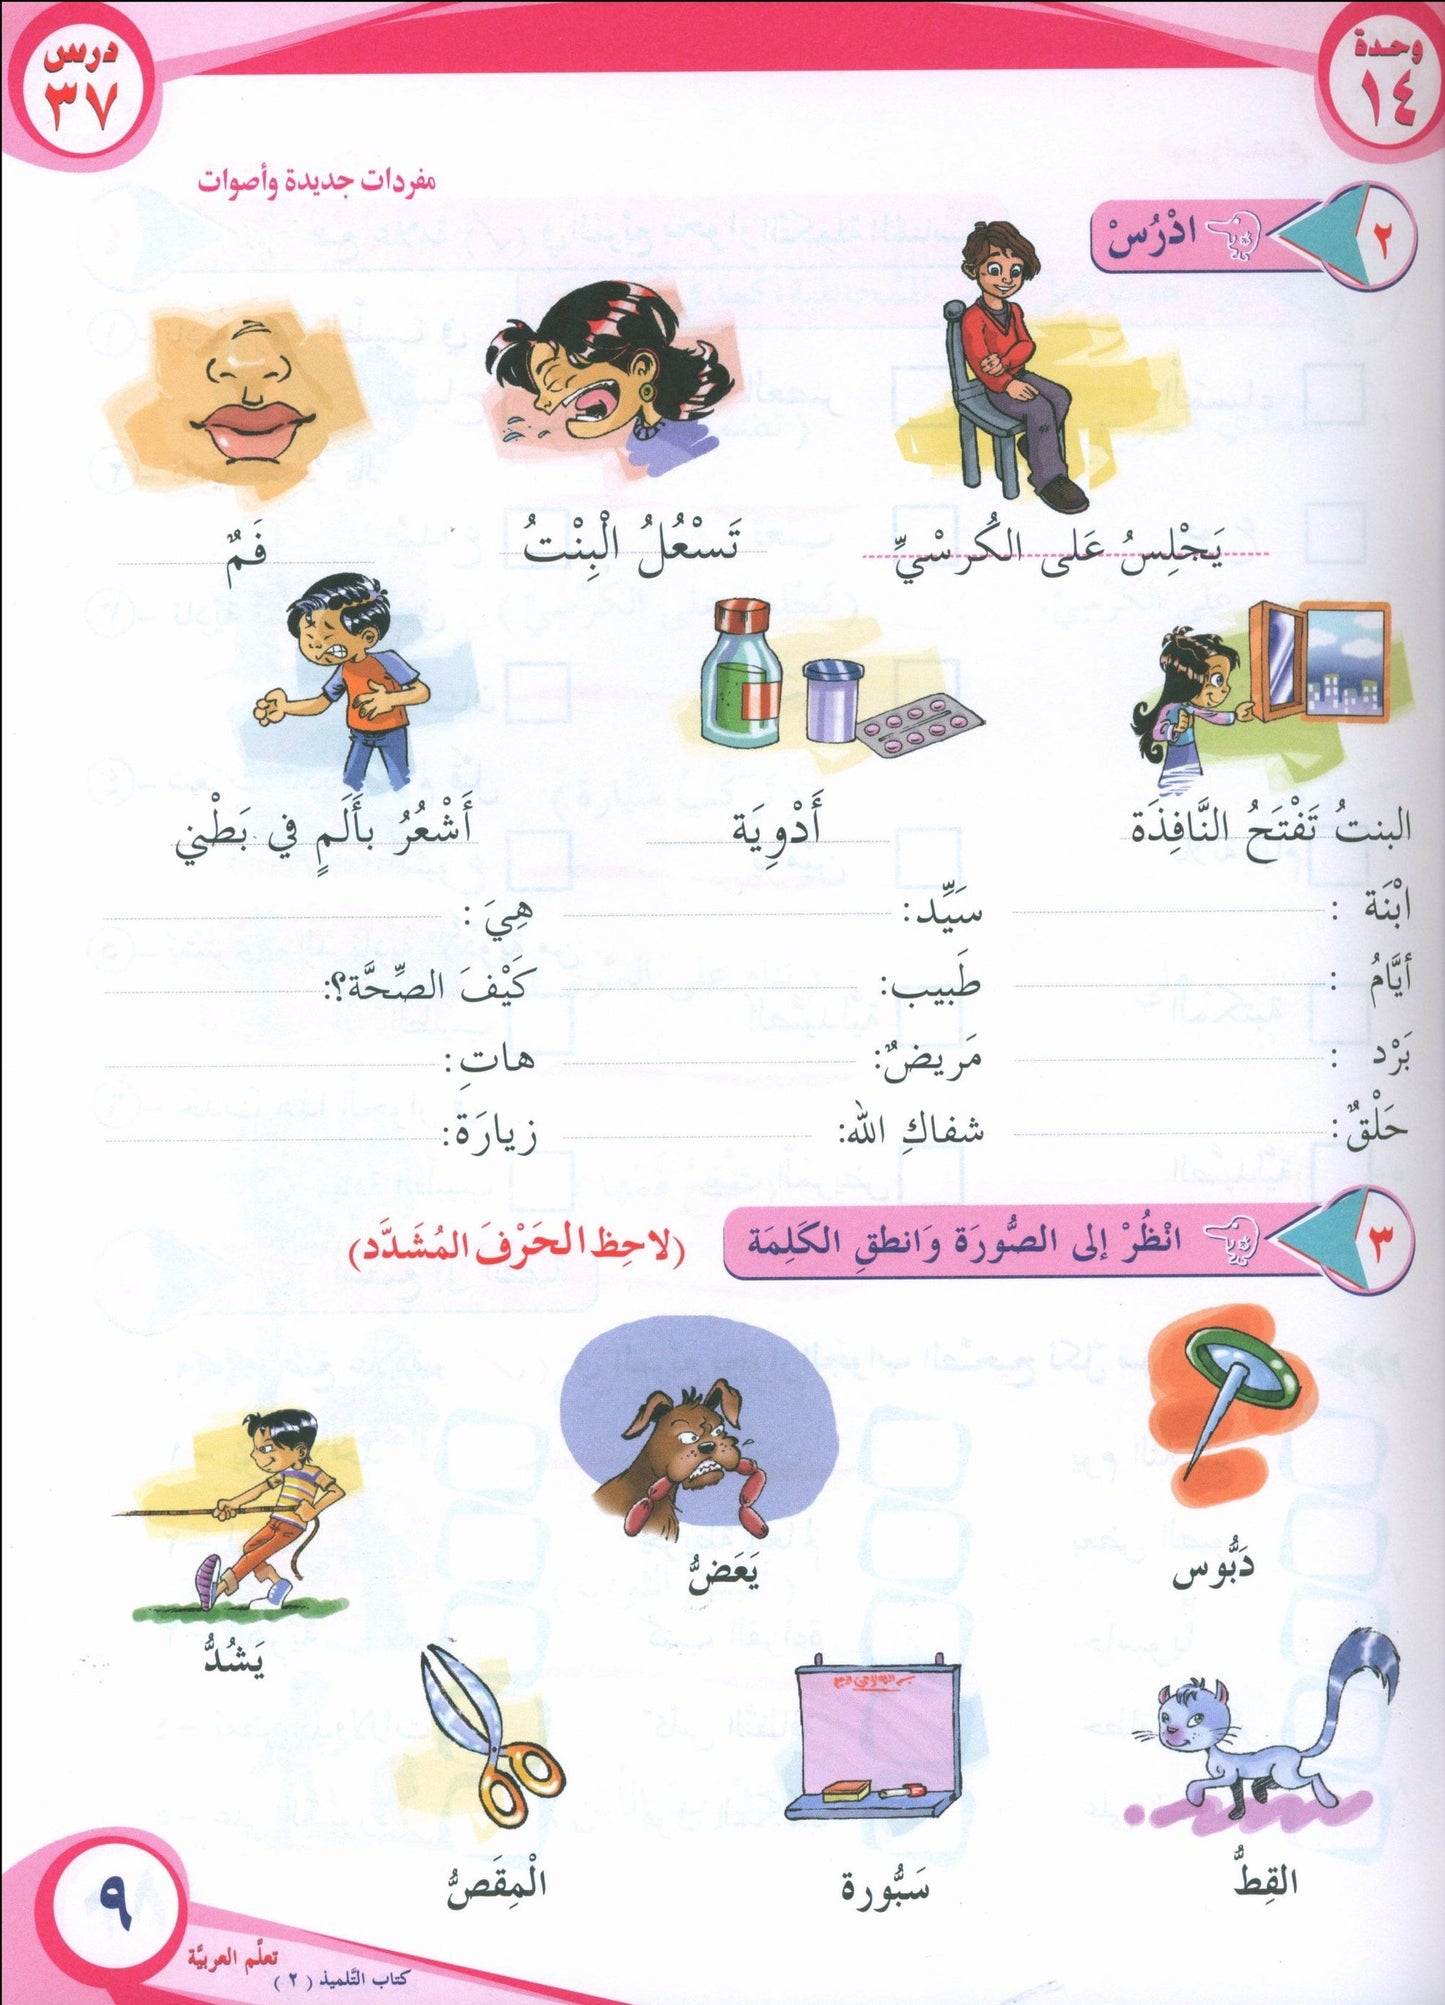 ICO Learn Arabic - Textbook - Level 2 Part 2 - تعلم العربية